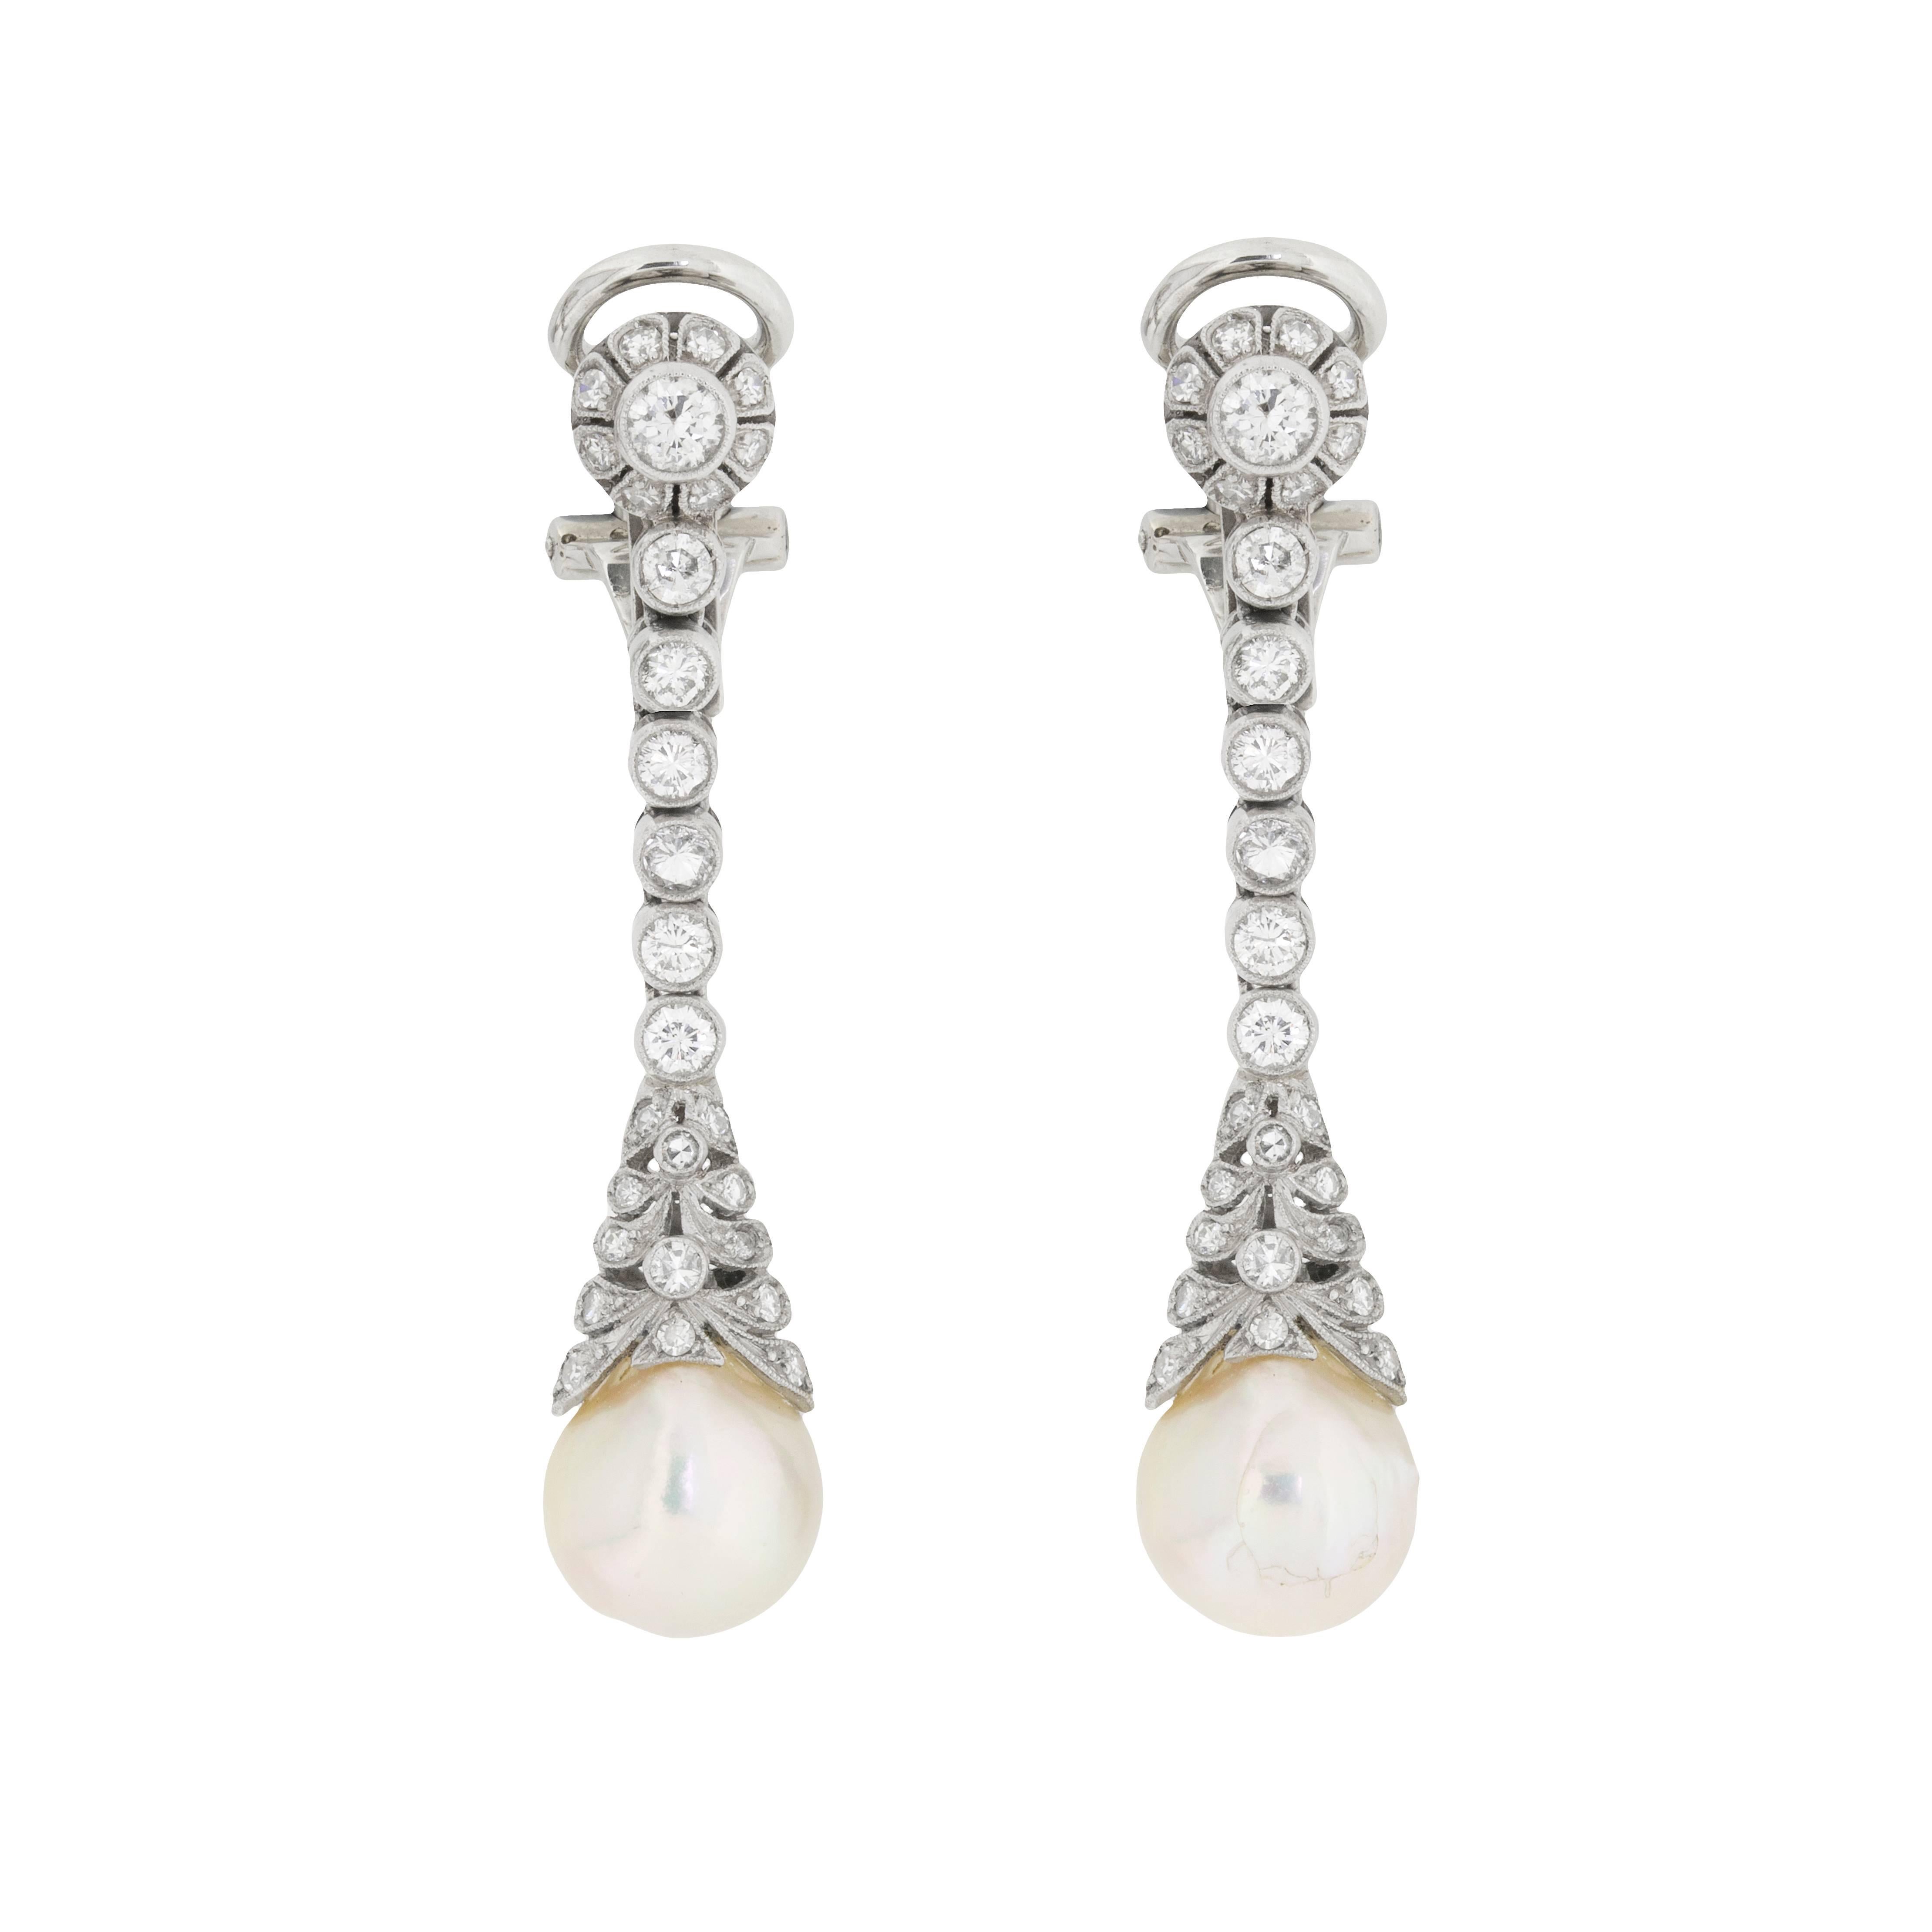 Late Deco Diamond and Pearl Drop Earrings, circa 1930s